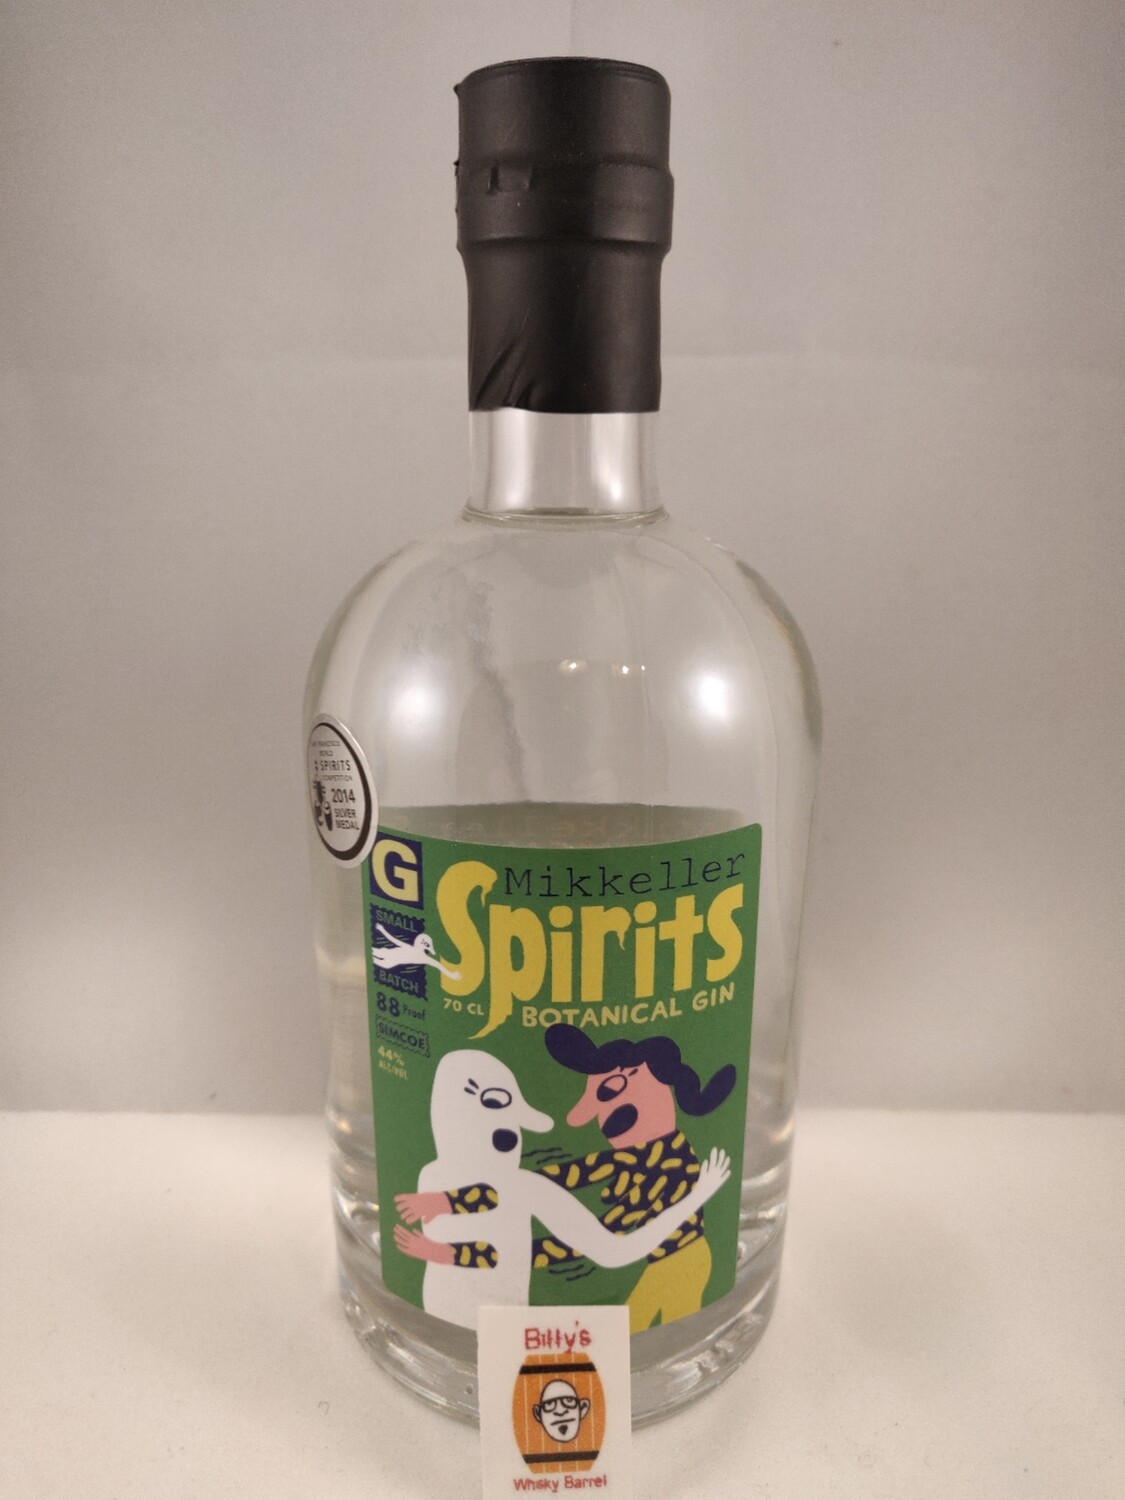 Mikkeller Spirits Botanical Gin (70cl - 44%)